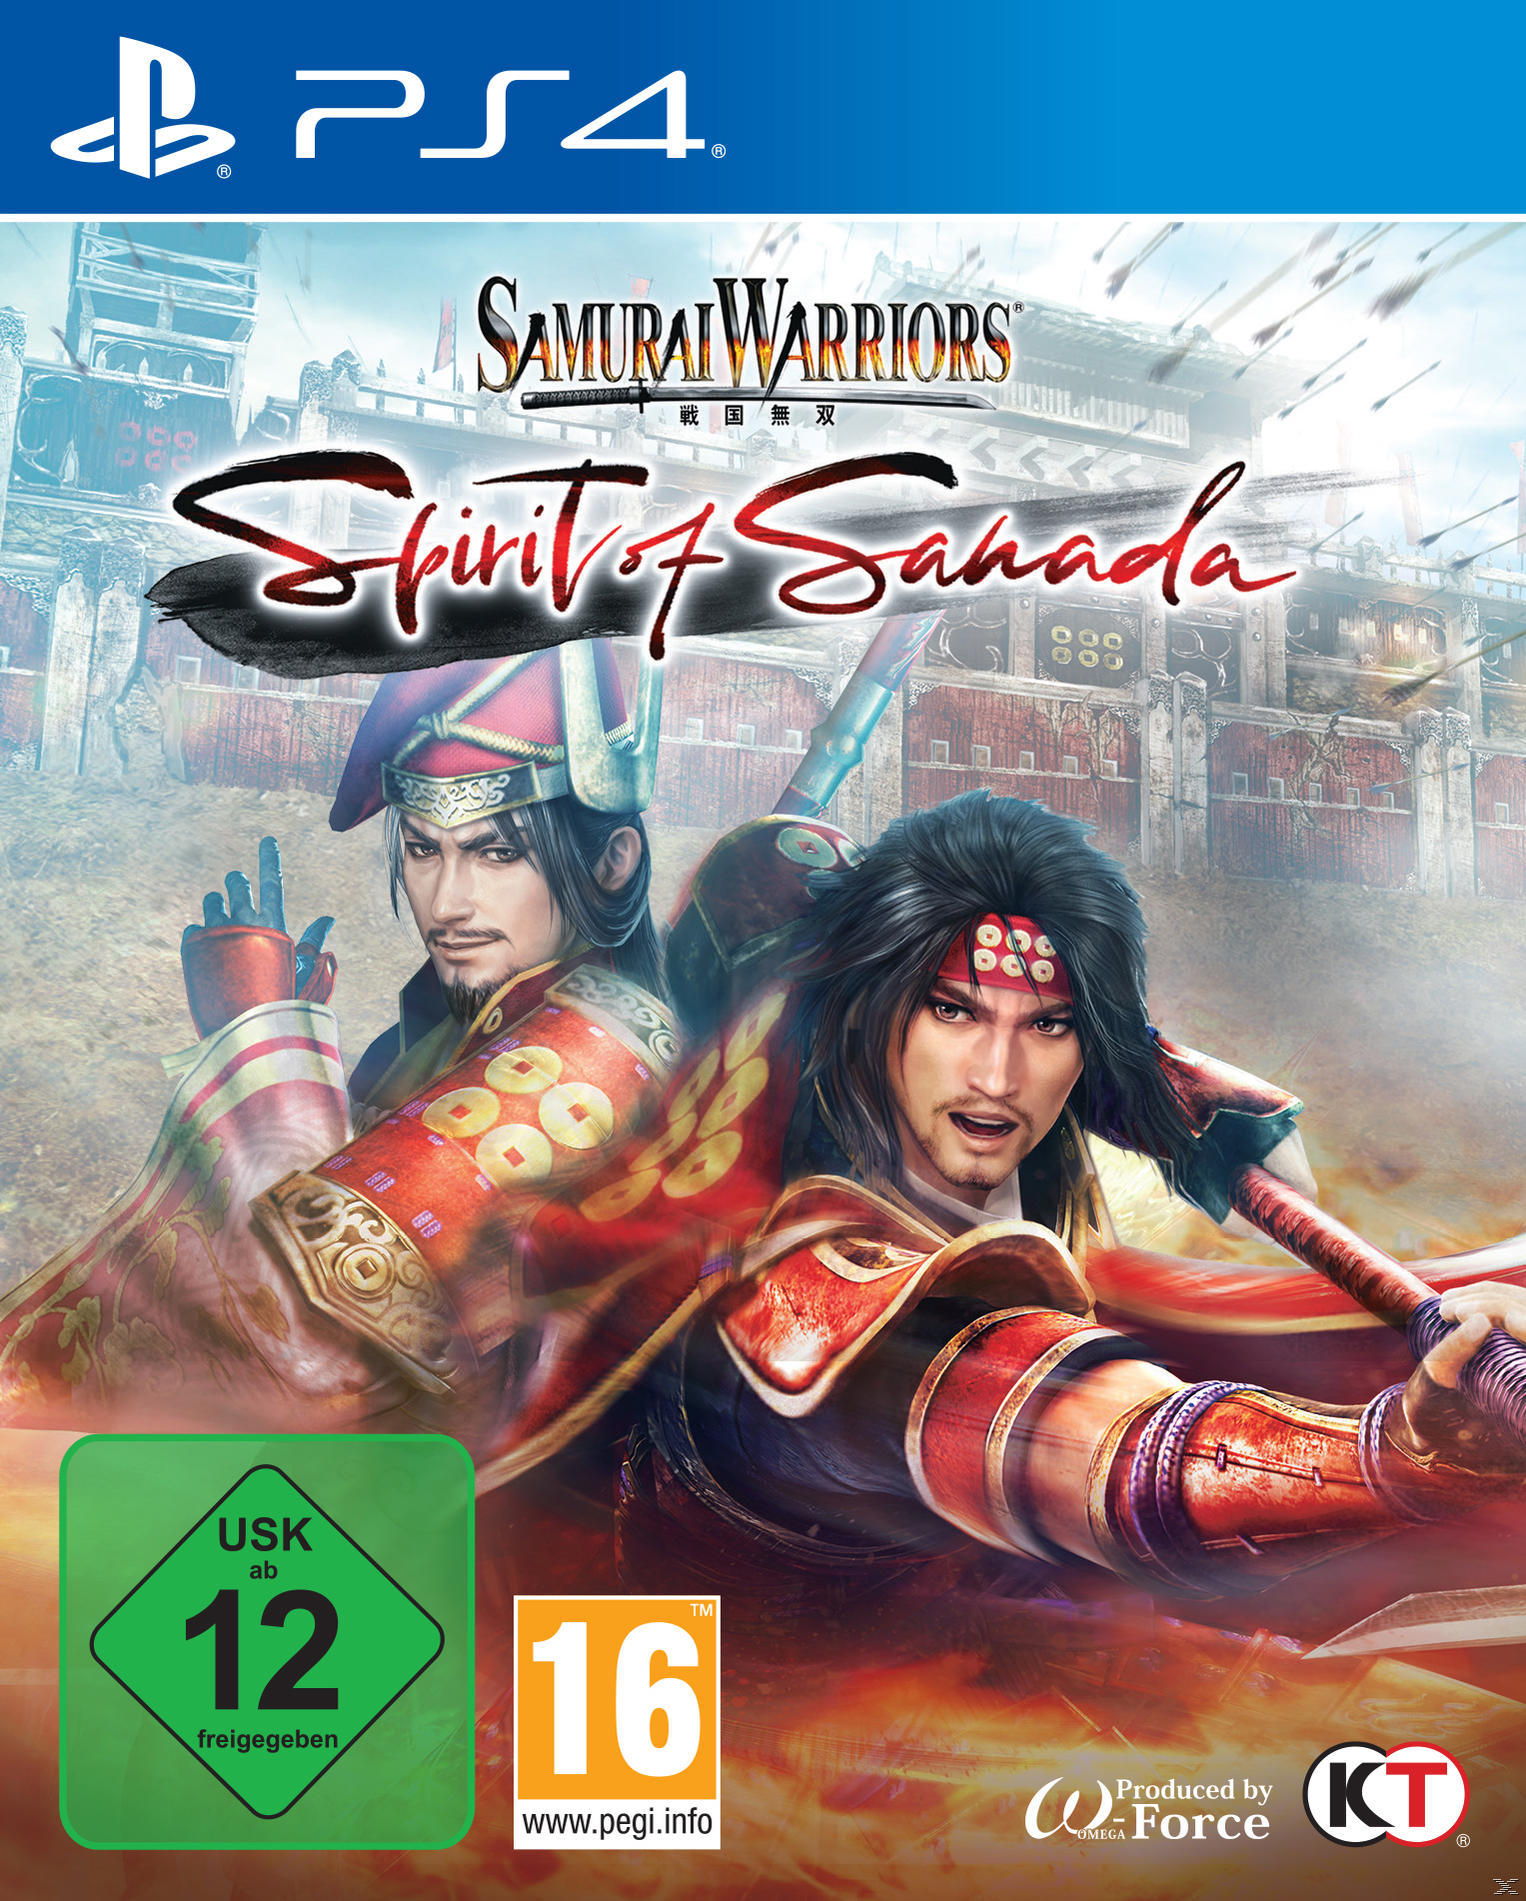 Samurai Warriors: Spirit [PlayStation - 4] of Sanada